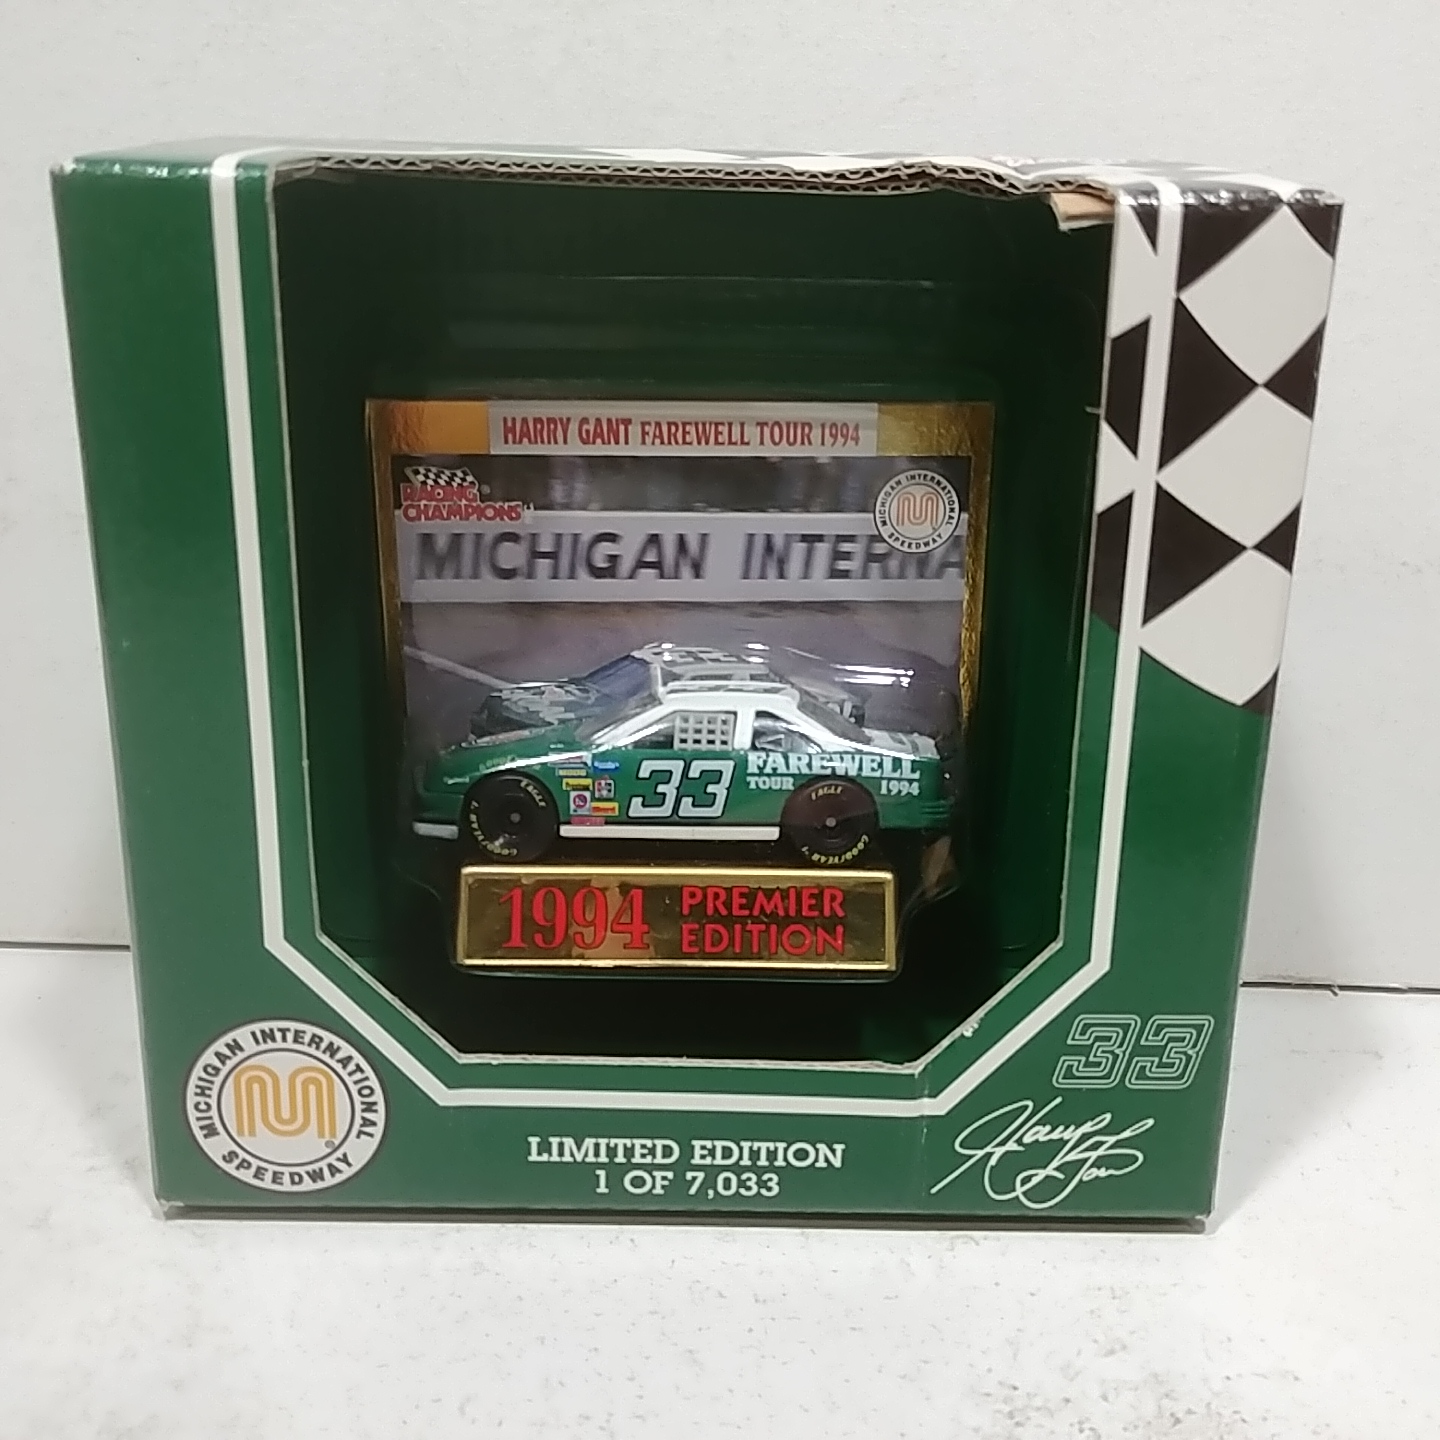 1994 Harry Gant 1/64th Racing Champions "Farewell Tour" Michigan car